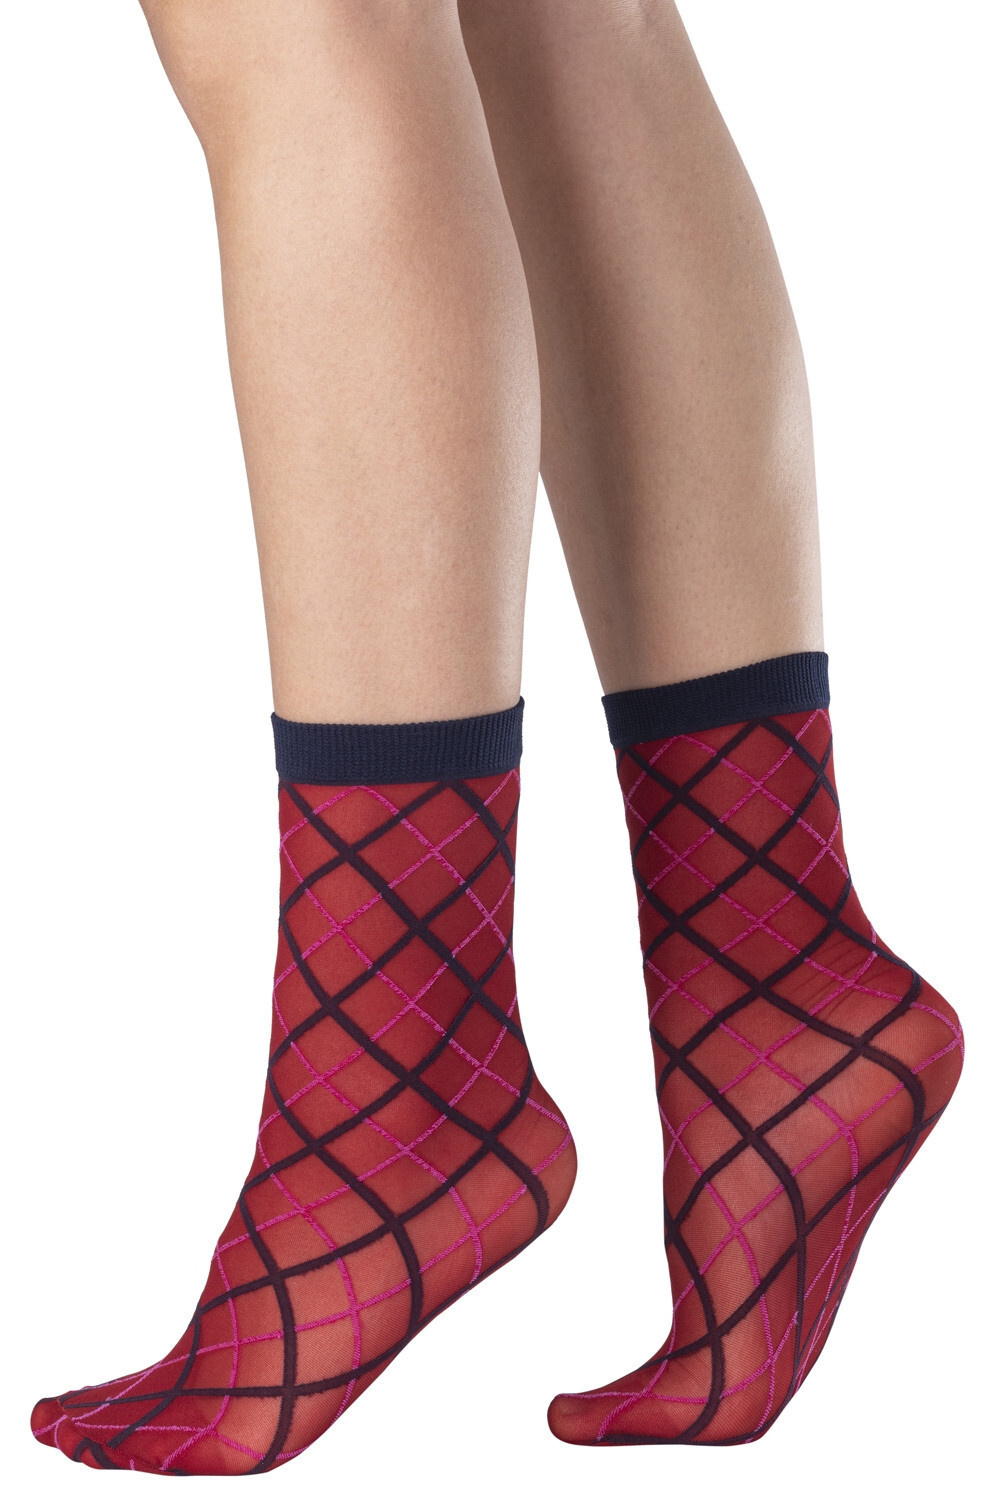 Scottish socks socks